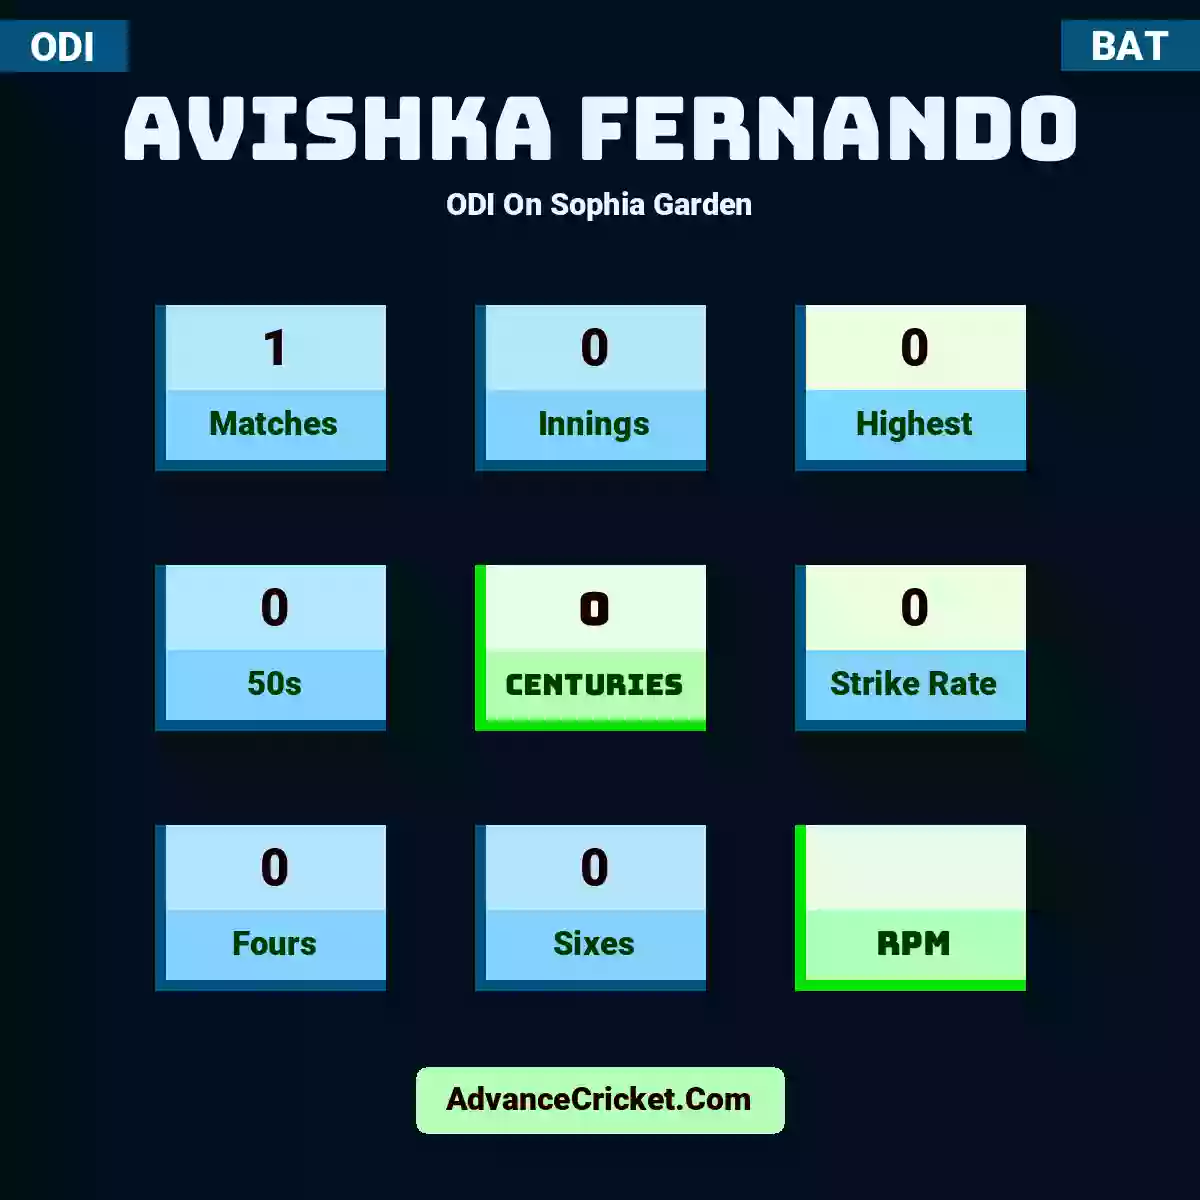 Avishka Fernando ODI  On Sophia Garden, Avishka Fernando played 1 matches, scored 0 runs as highest, 0 half-centuries, and 0 centuries, with a strike rate of 0. A.Fernando hit 0 fours and 0 sixes.